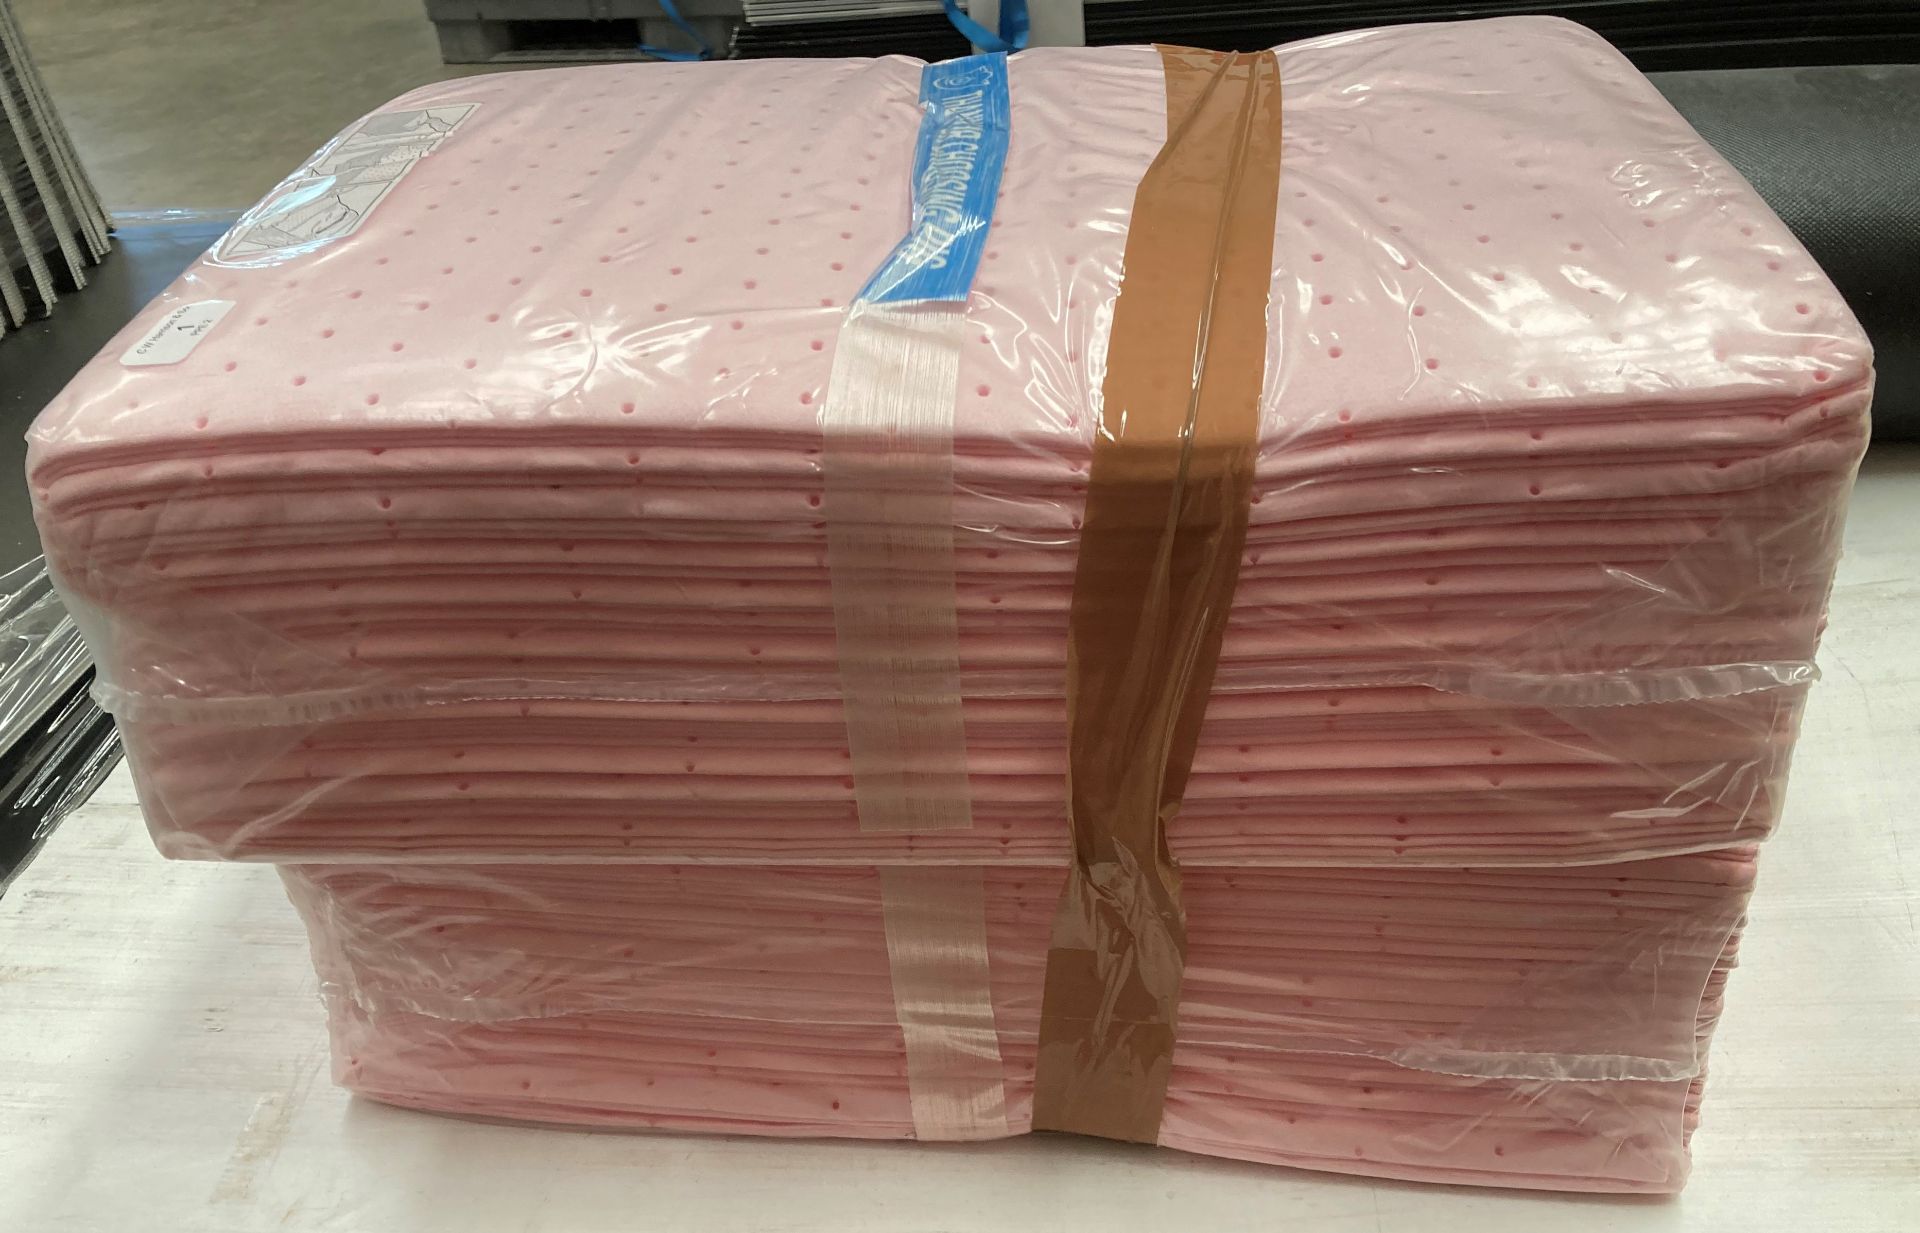 2 packs of 50 Pig Hazmat Chemical absorbent mat pads - 15" x 20"